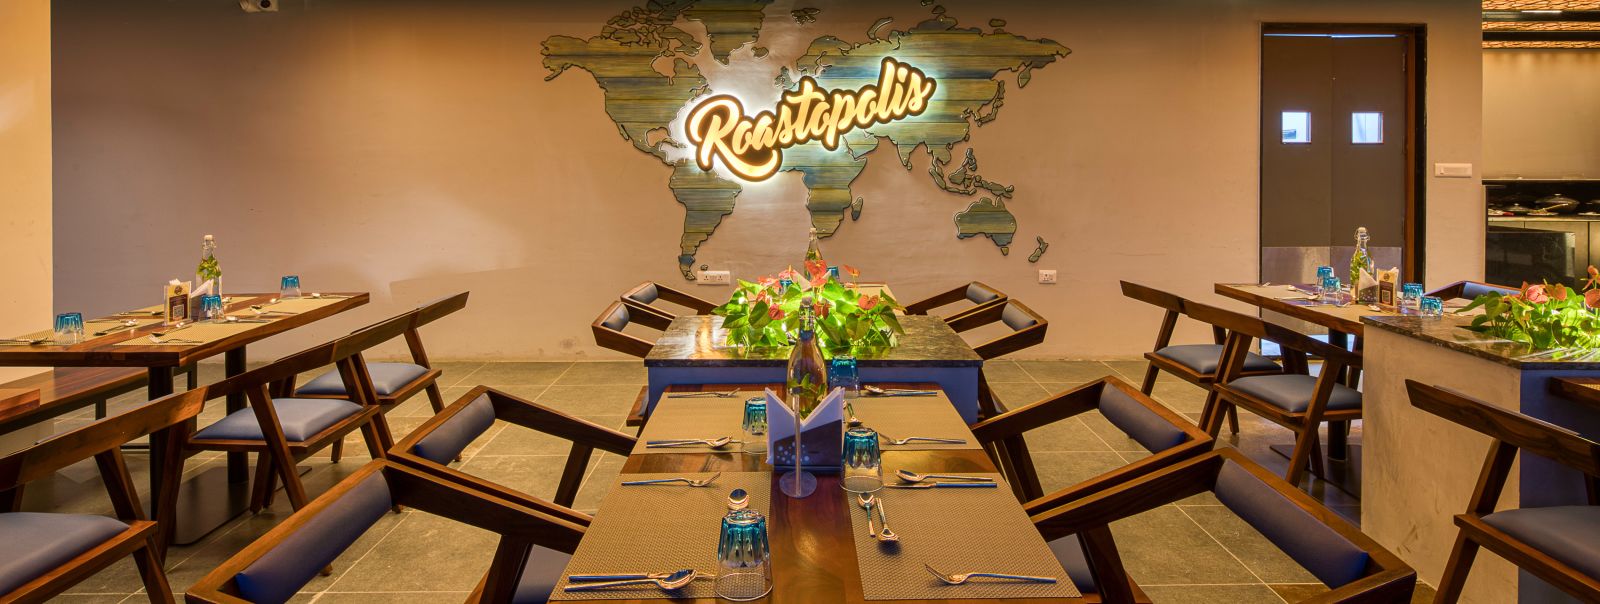 Interior of Roastopolis Restaurant at Le Foliage by TGI, Bangalore 3